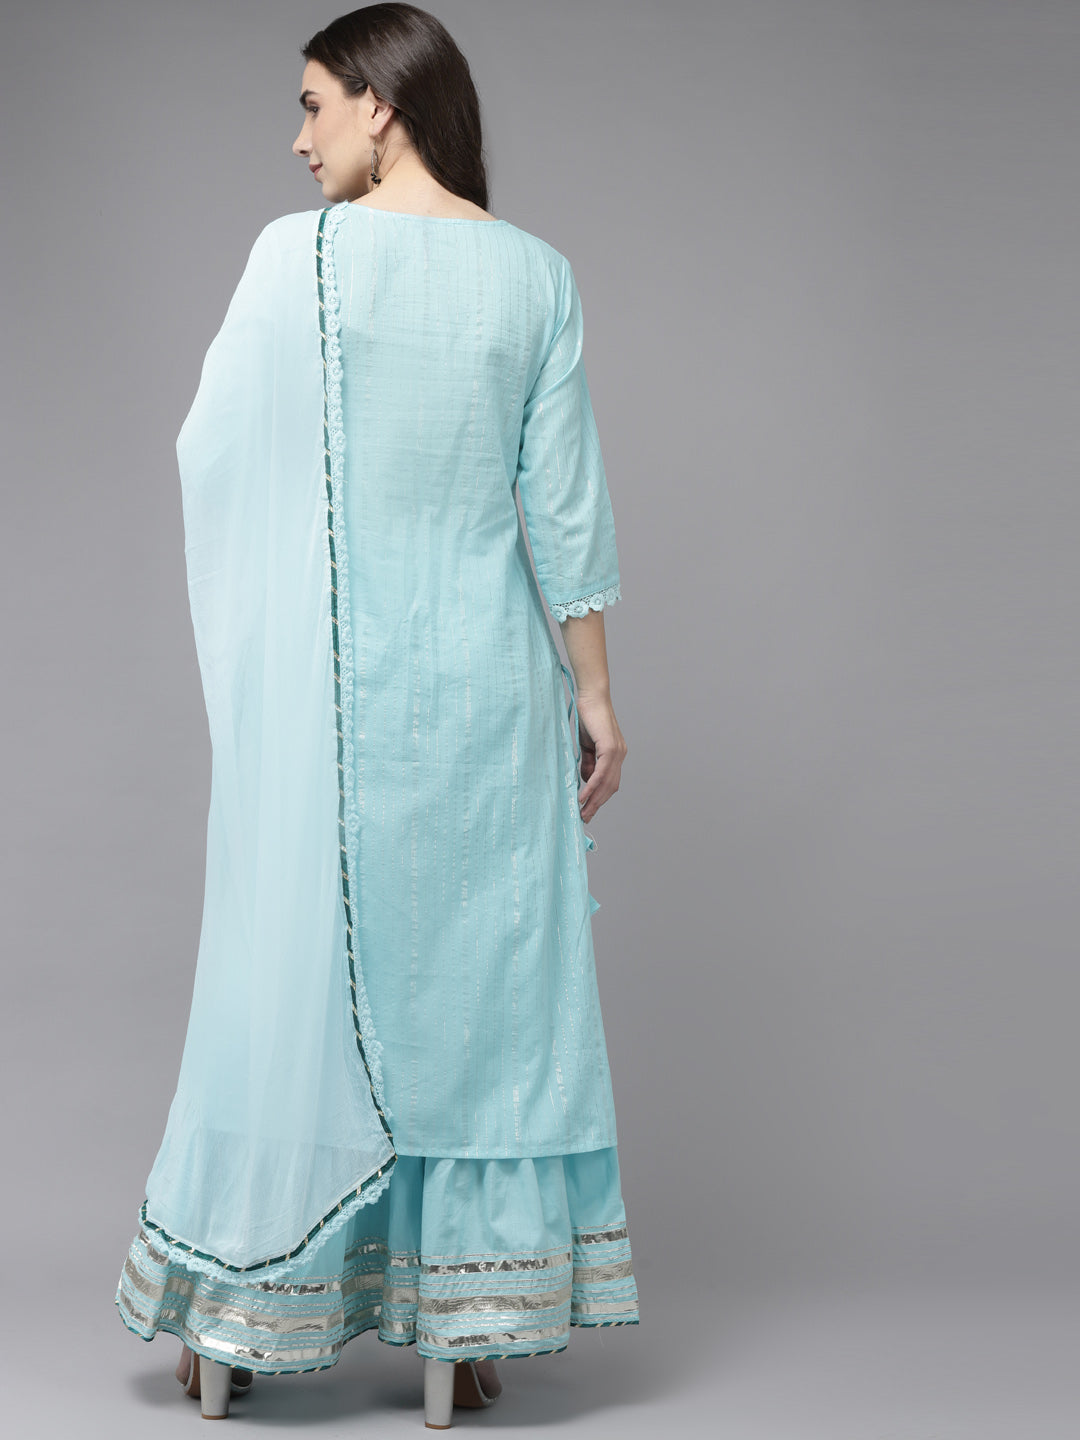 Ishin Women's Cotton Blue Embroidered A-Line Kurta with Sharara Dupatta Set